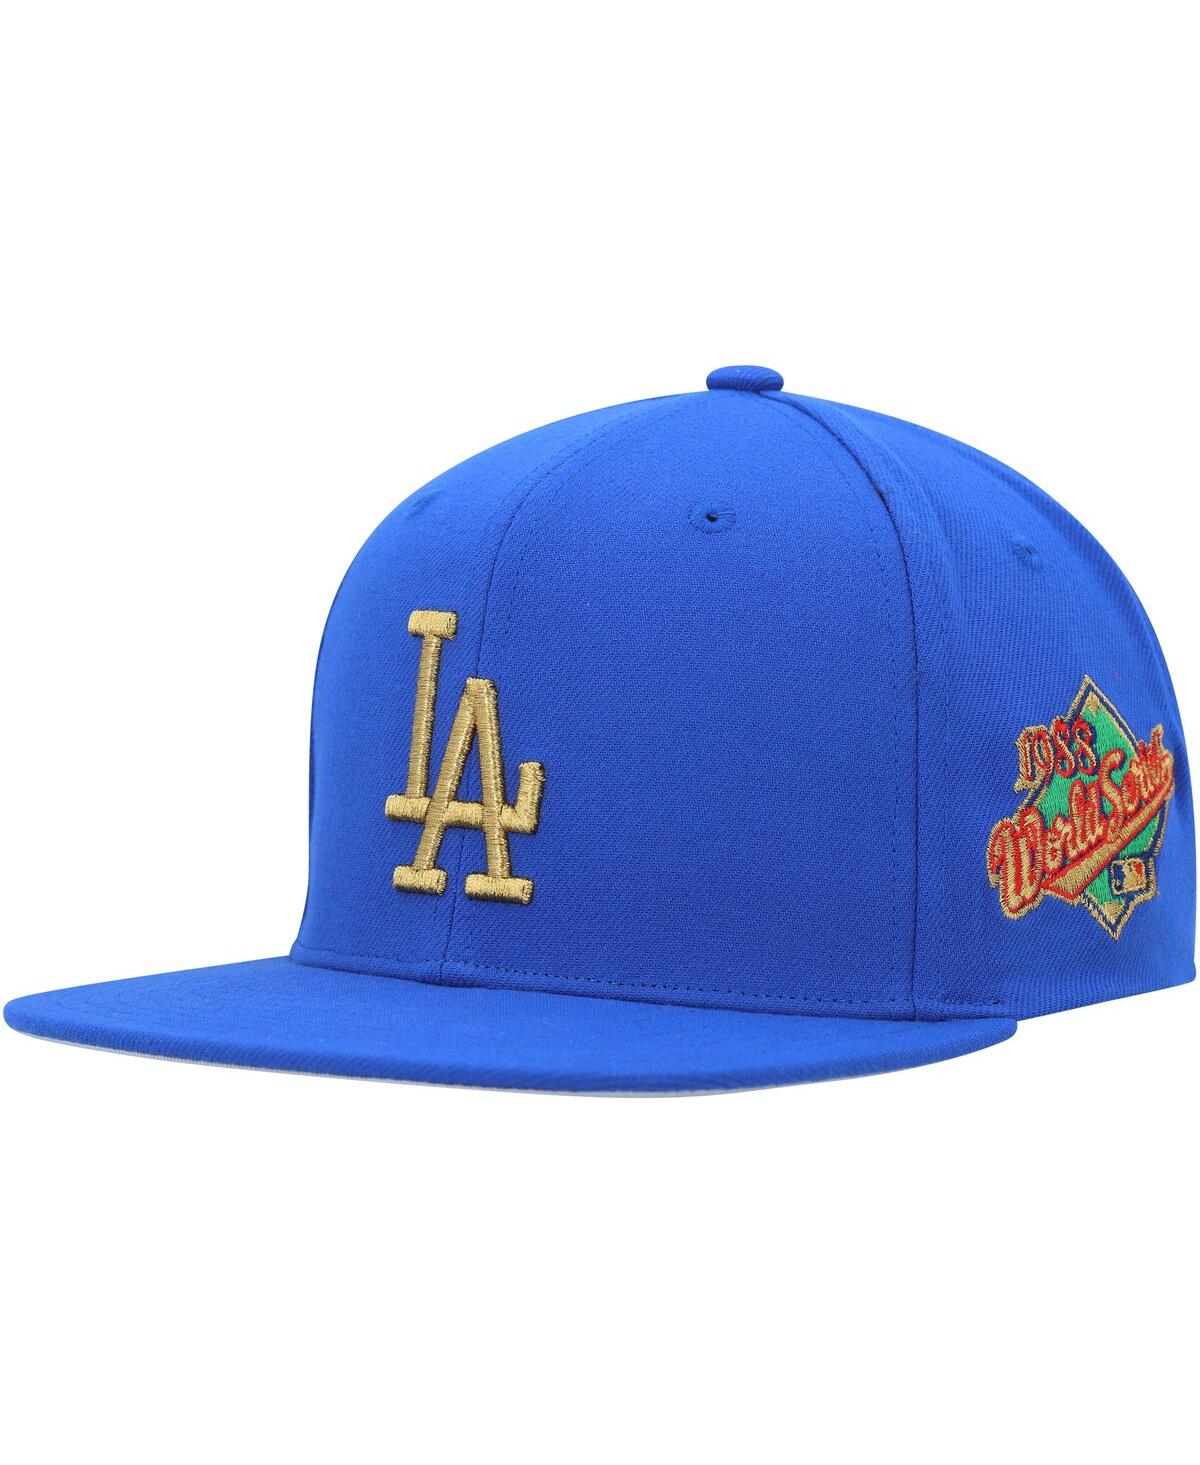 Shop Mitchell & Ness Men's  Blue Los Angeles Dodgers Champ'd Up Snapback Hat